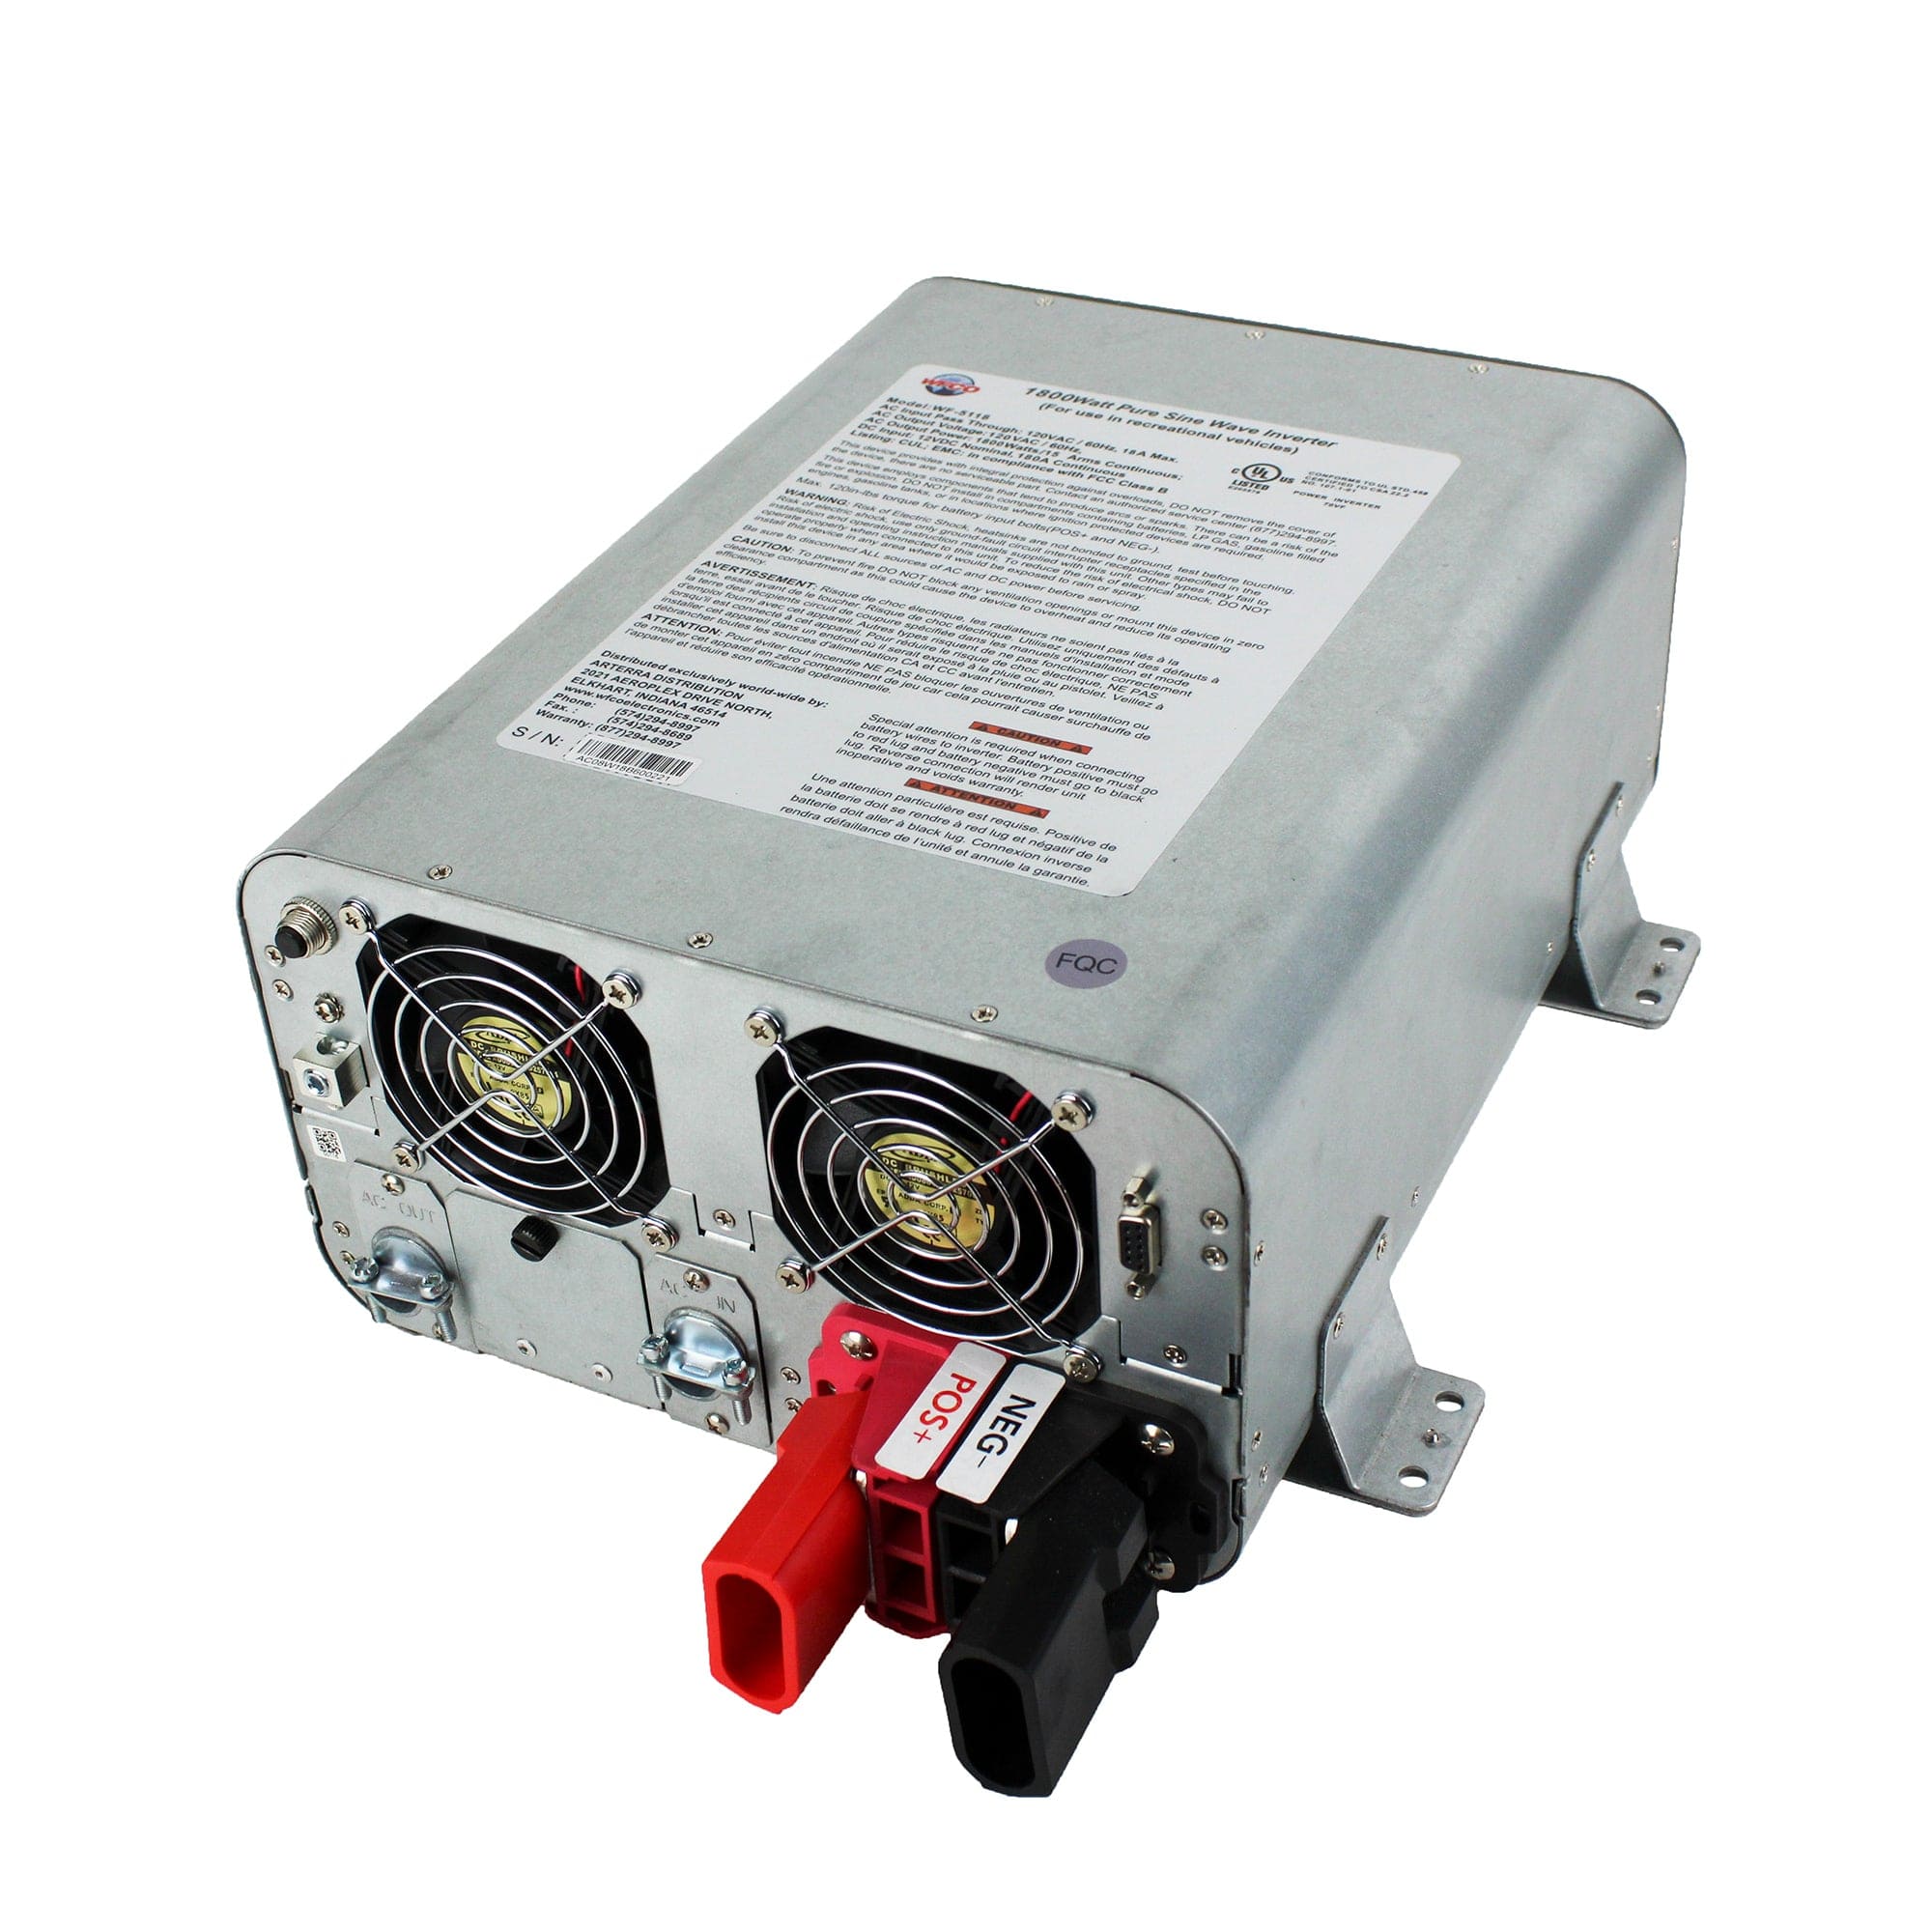 WFCO WF-5118 1800 Watt Power Inverter